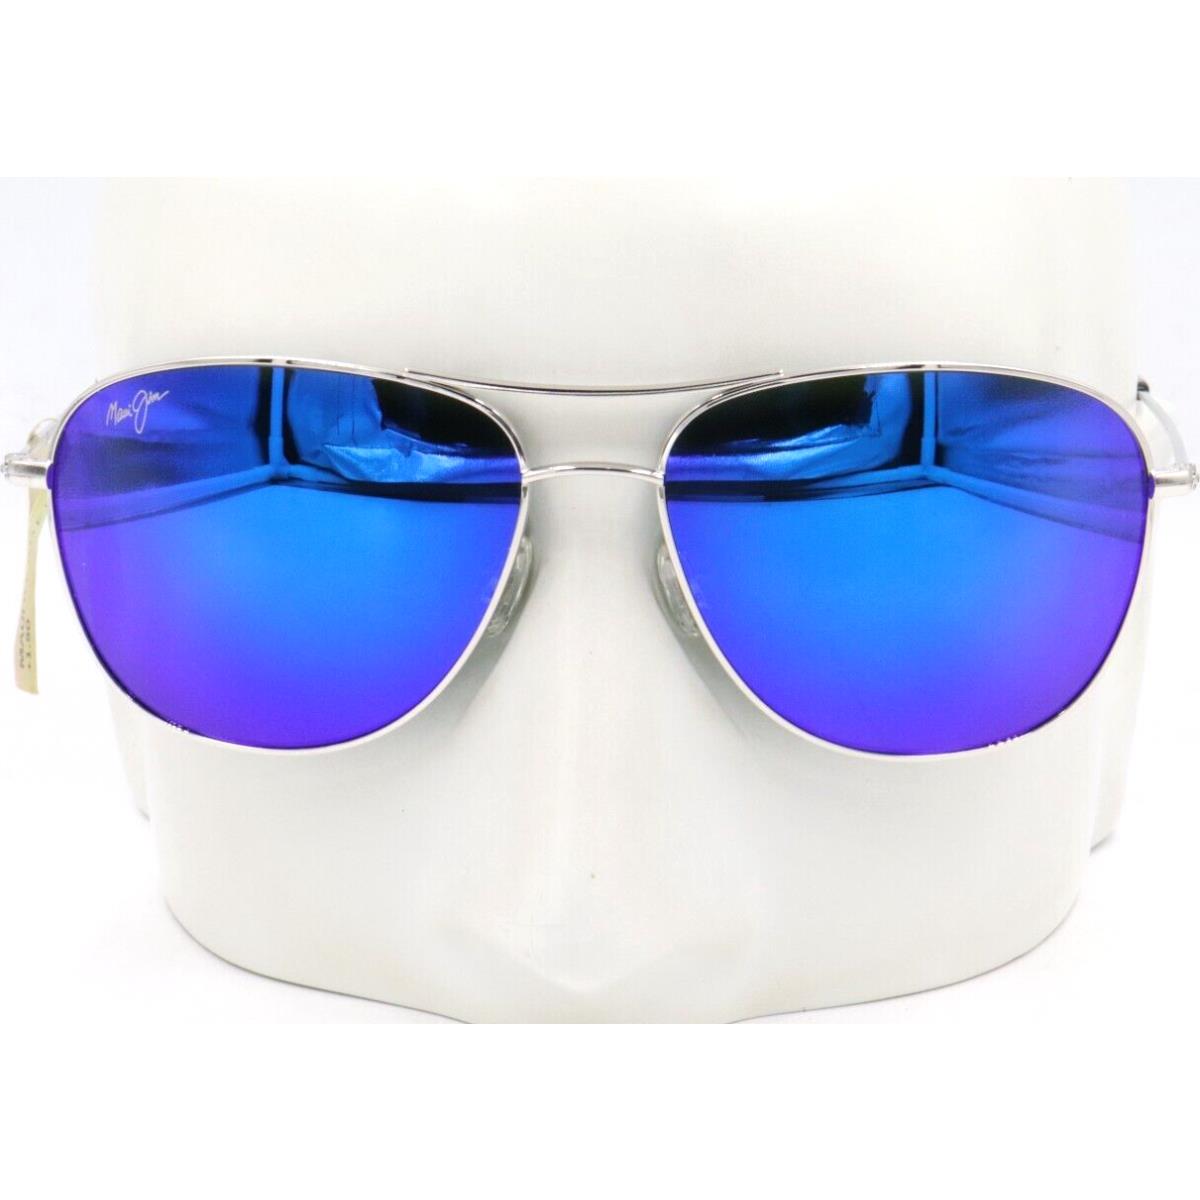 Maui Jim Blue Cliff House Silver Reader +1.50 Sunglasses B247-1715